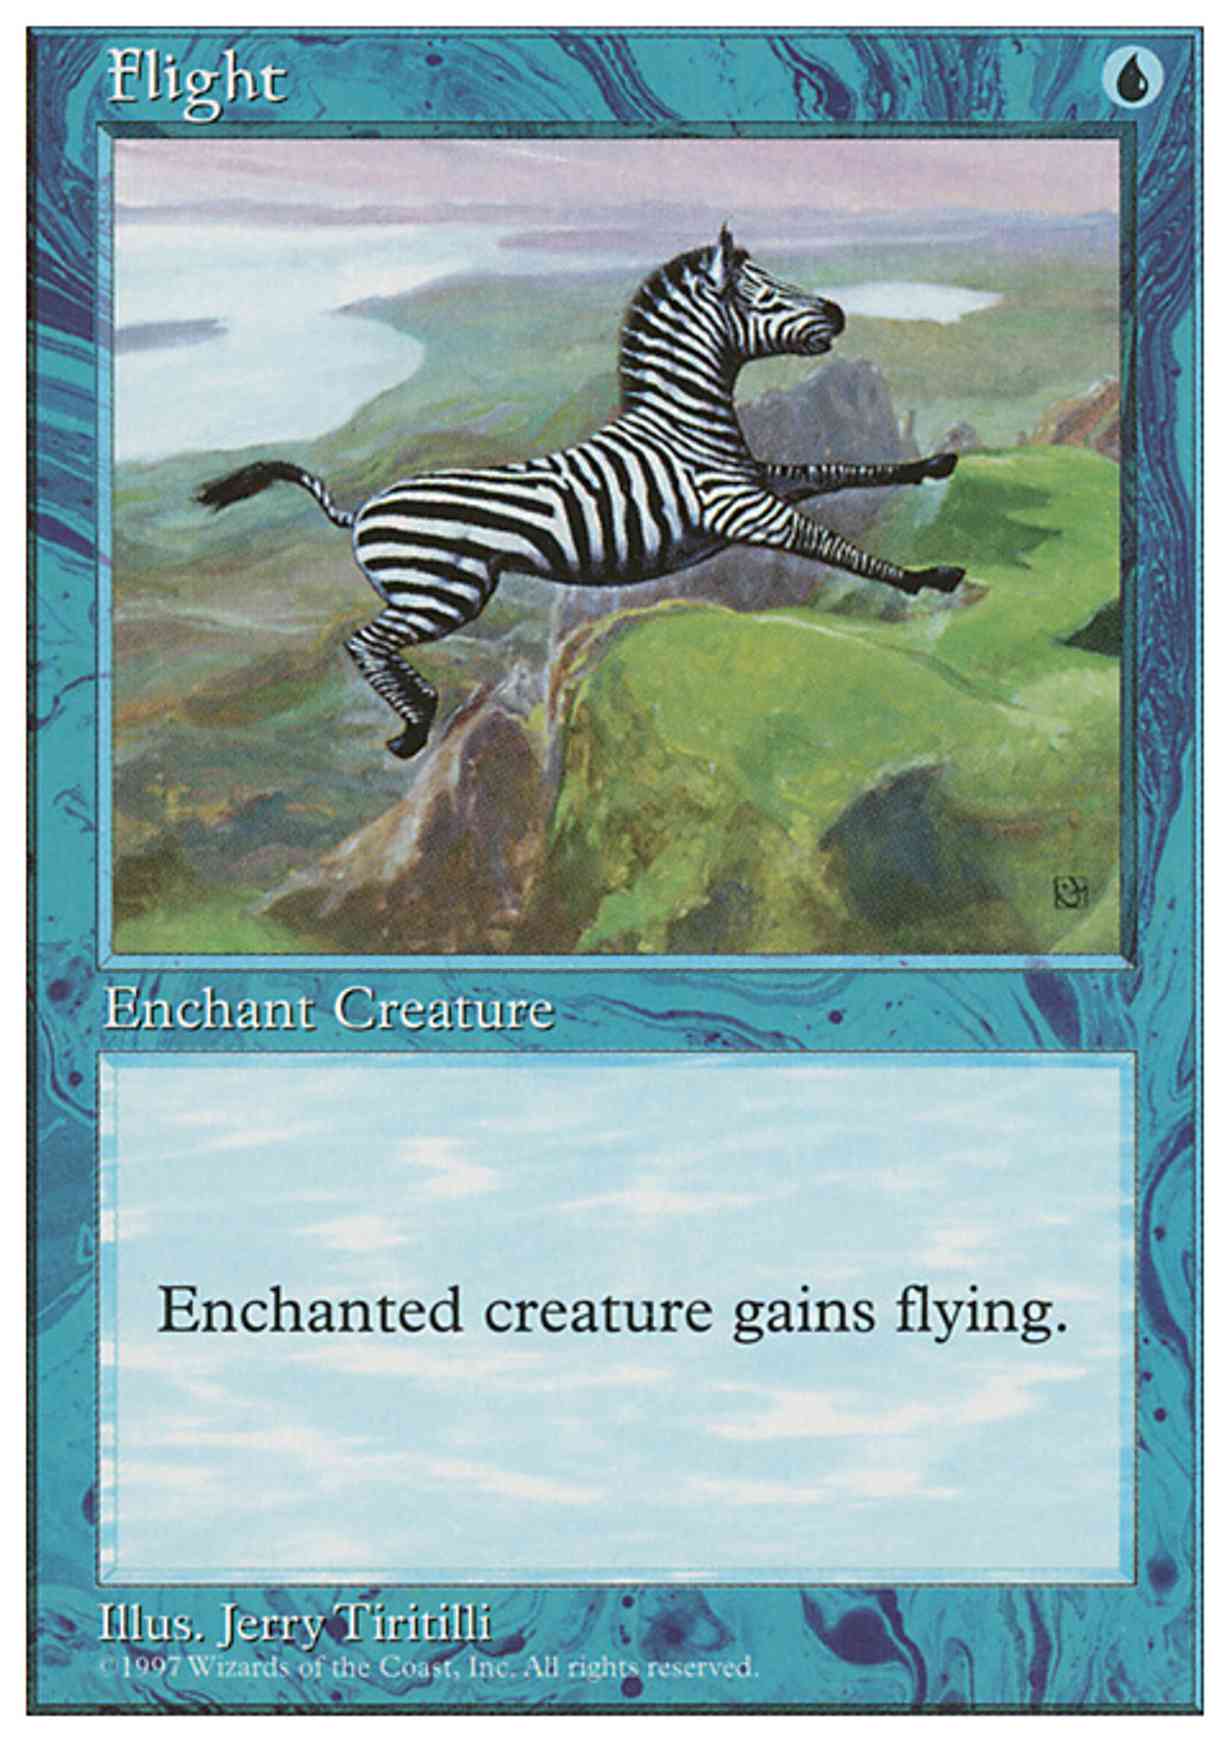 Flight magic card front